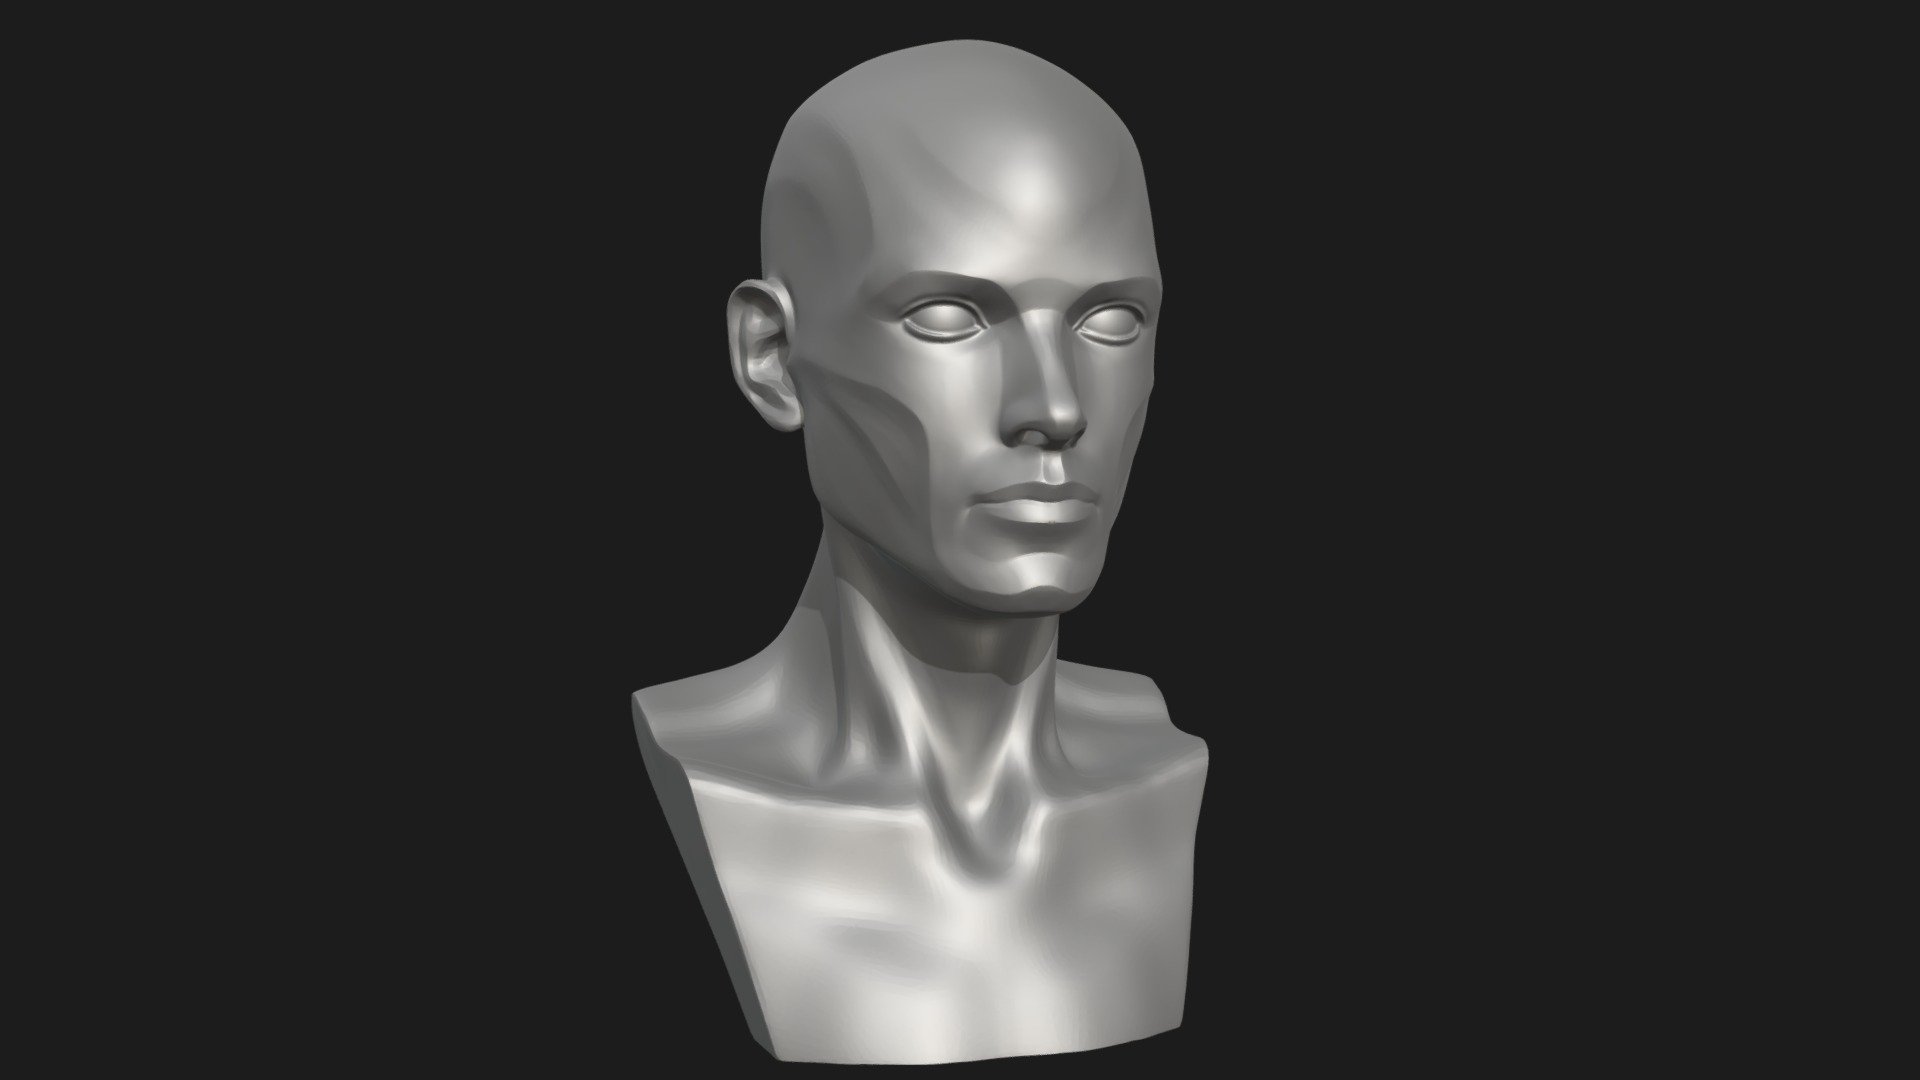 Binaural head design A - 3D model by C.J..Goldman 3d model